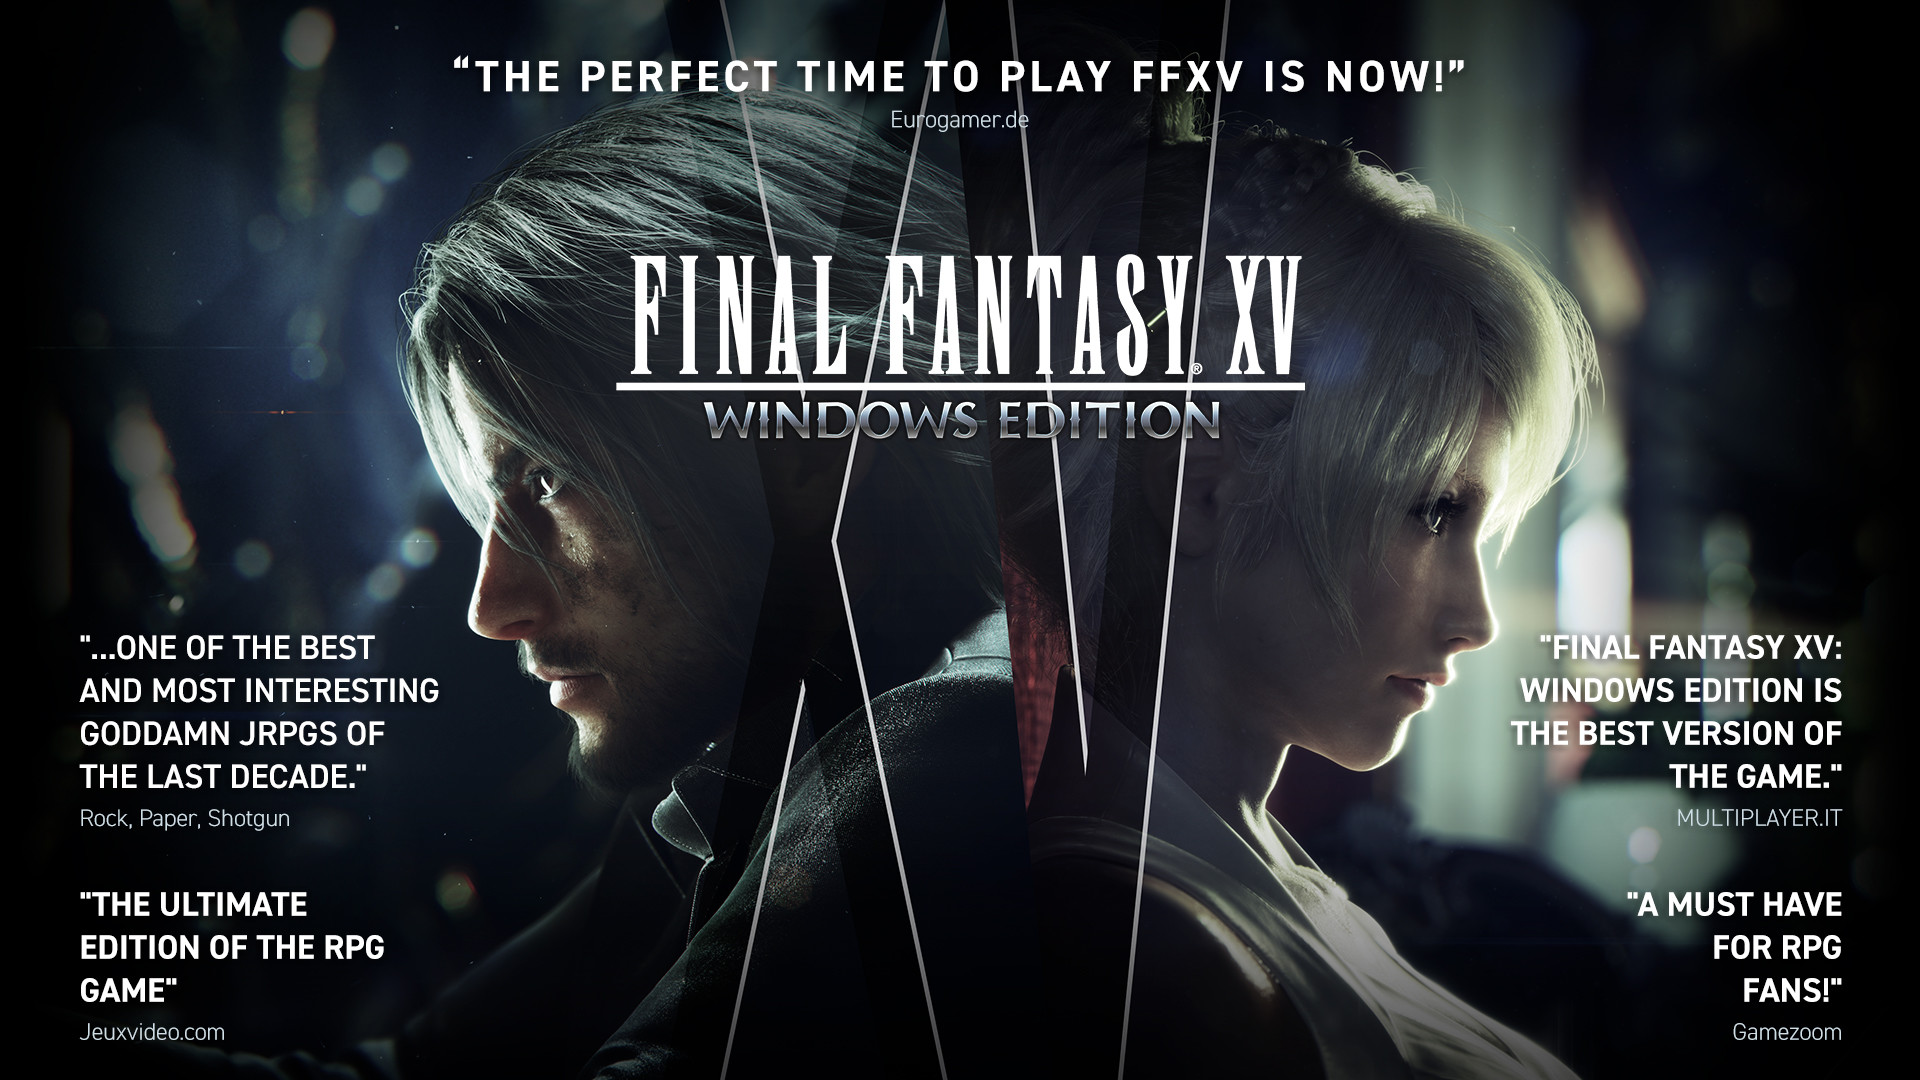 Final Fantasy XV Royal Edition - Xbox One | Xbox One | GameStop